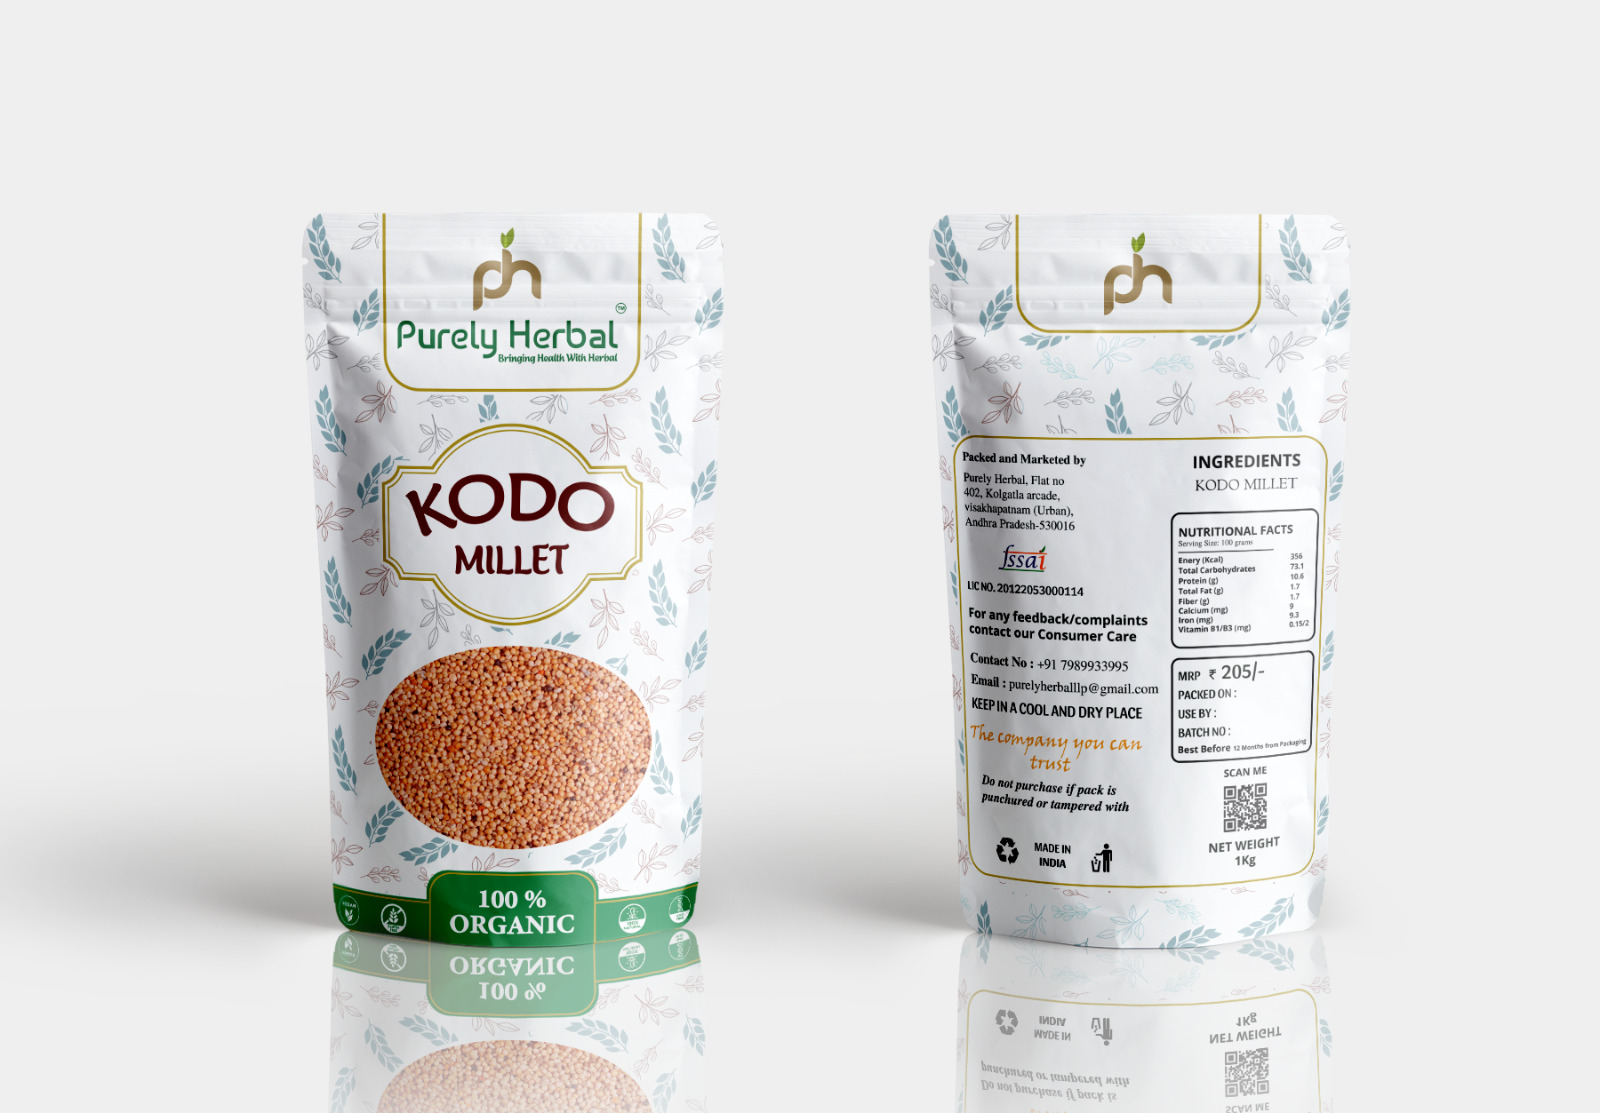 Purely Herbal Kodo  Millets